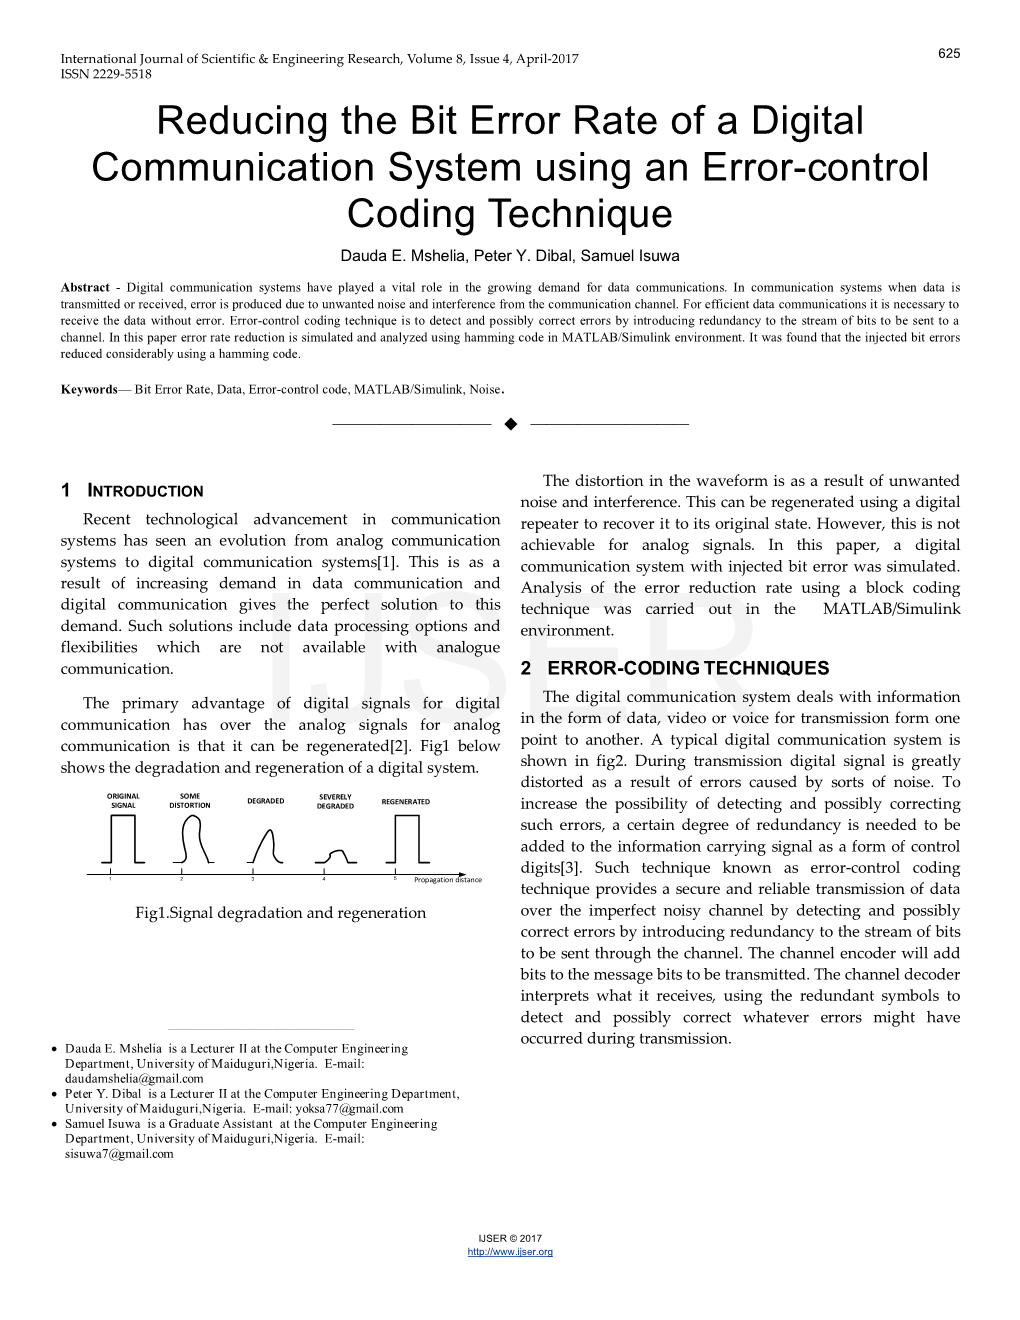 Reducing the Bit Error Rate of a Digital Communication System Using an Error-Control Coding Technique Dauda E